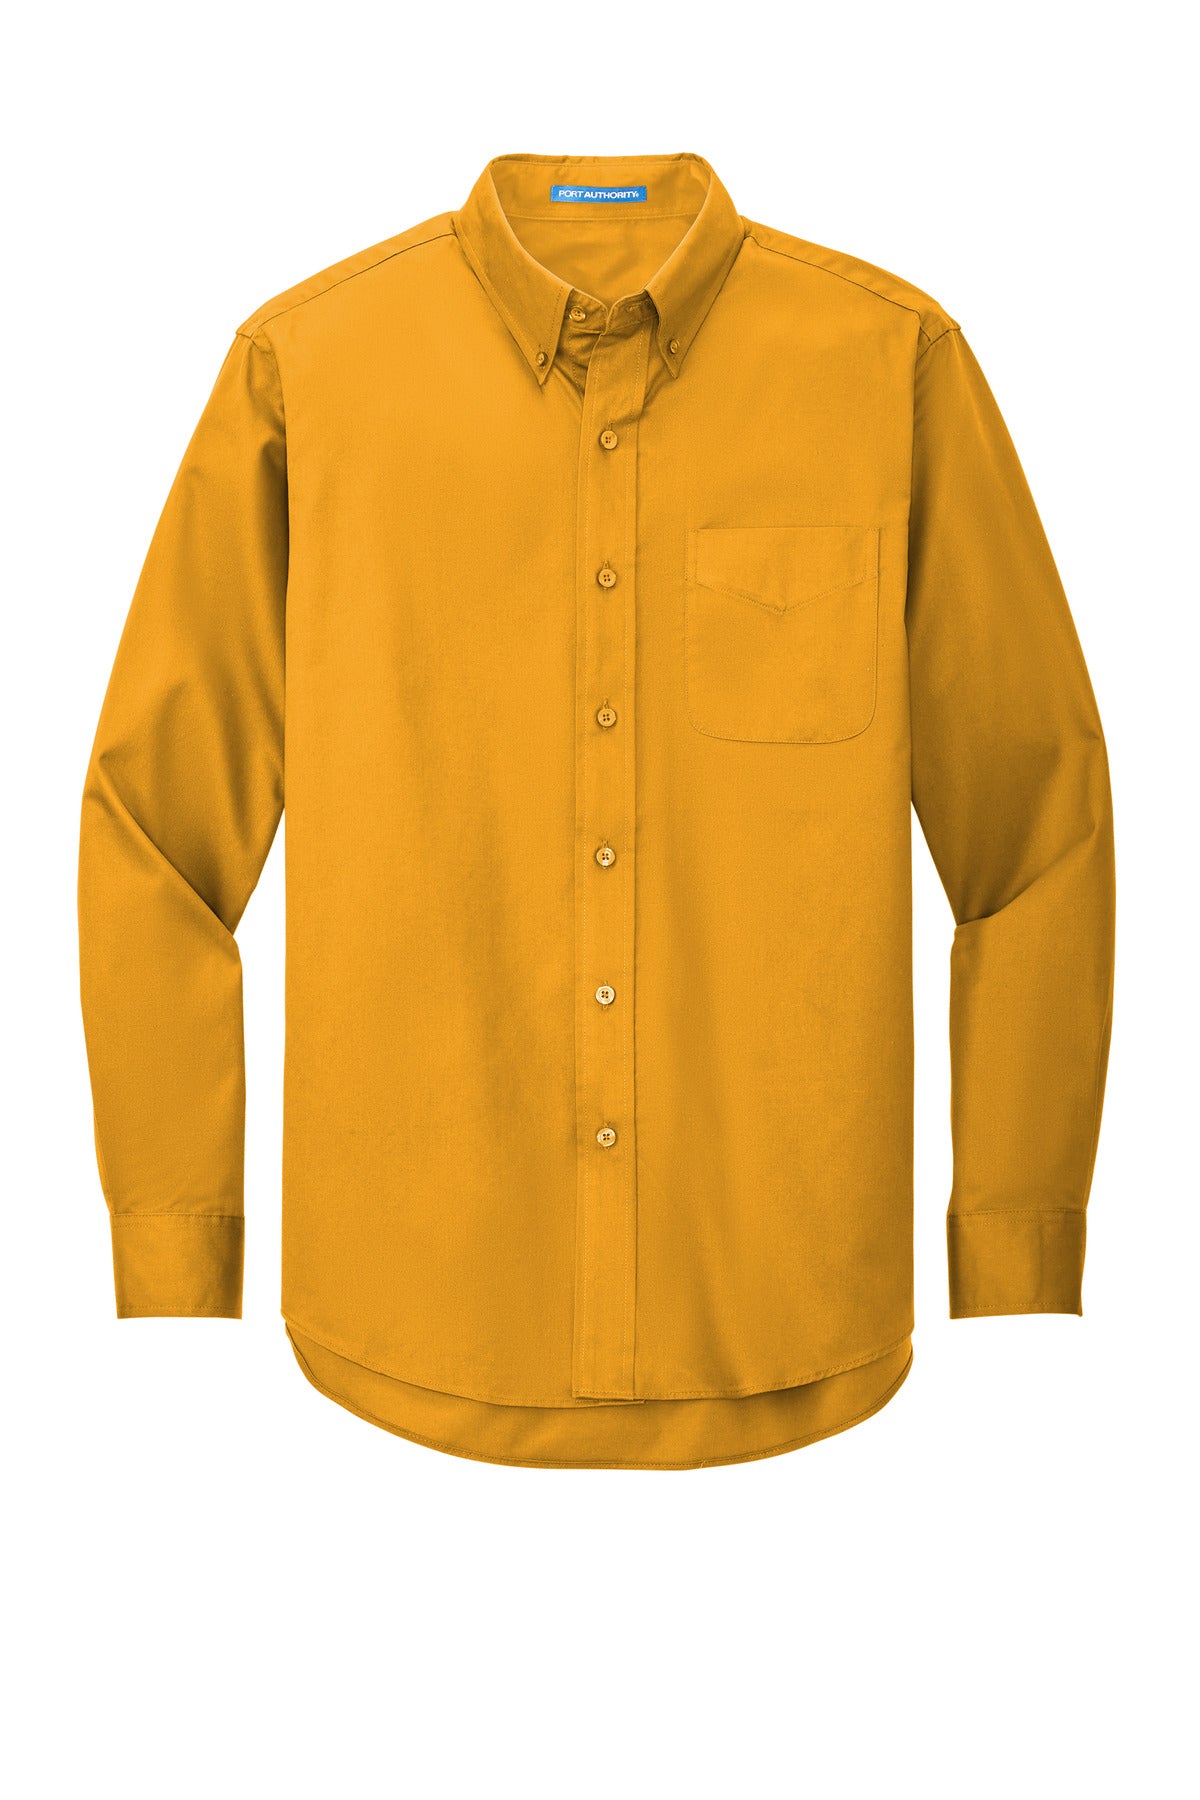 [CUSTOM] Long Sleeve Dress Shirt (Unisex) (Rest of Colors) [S608]